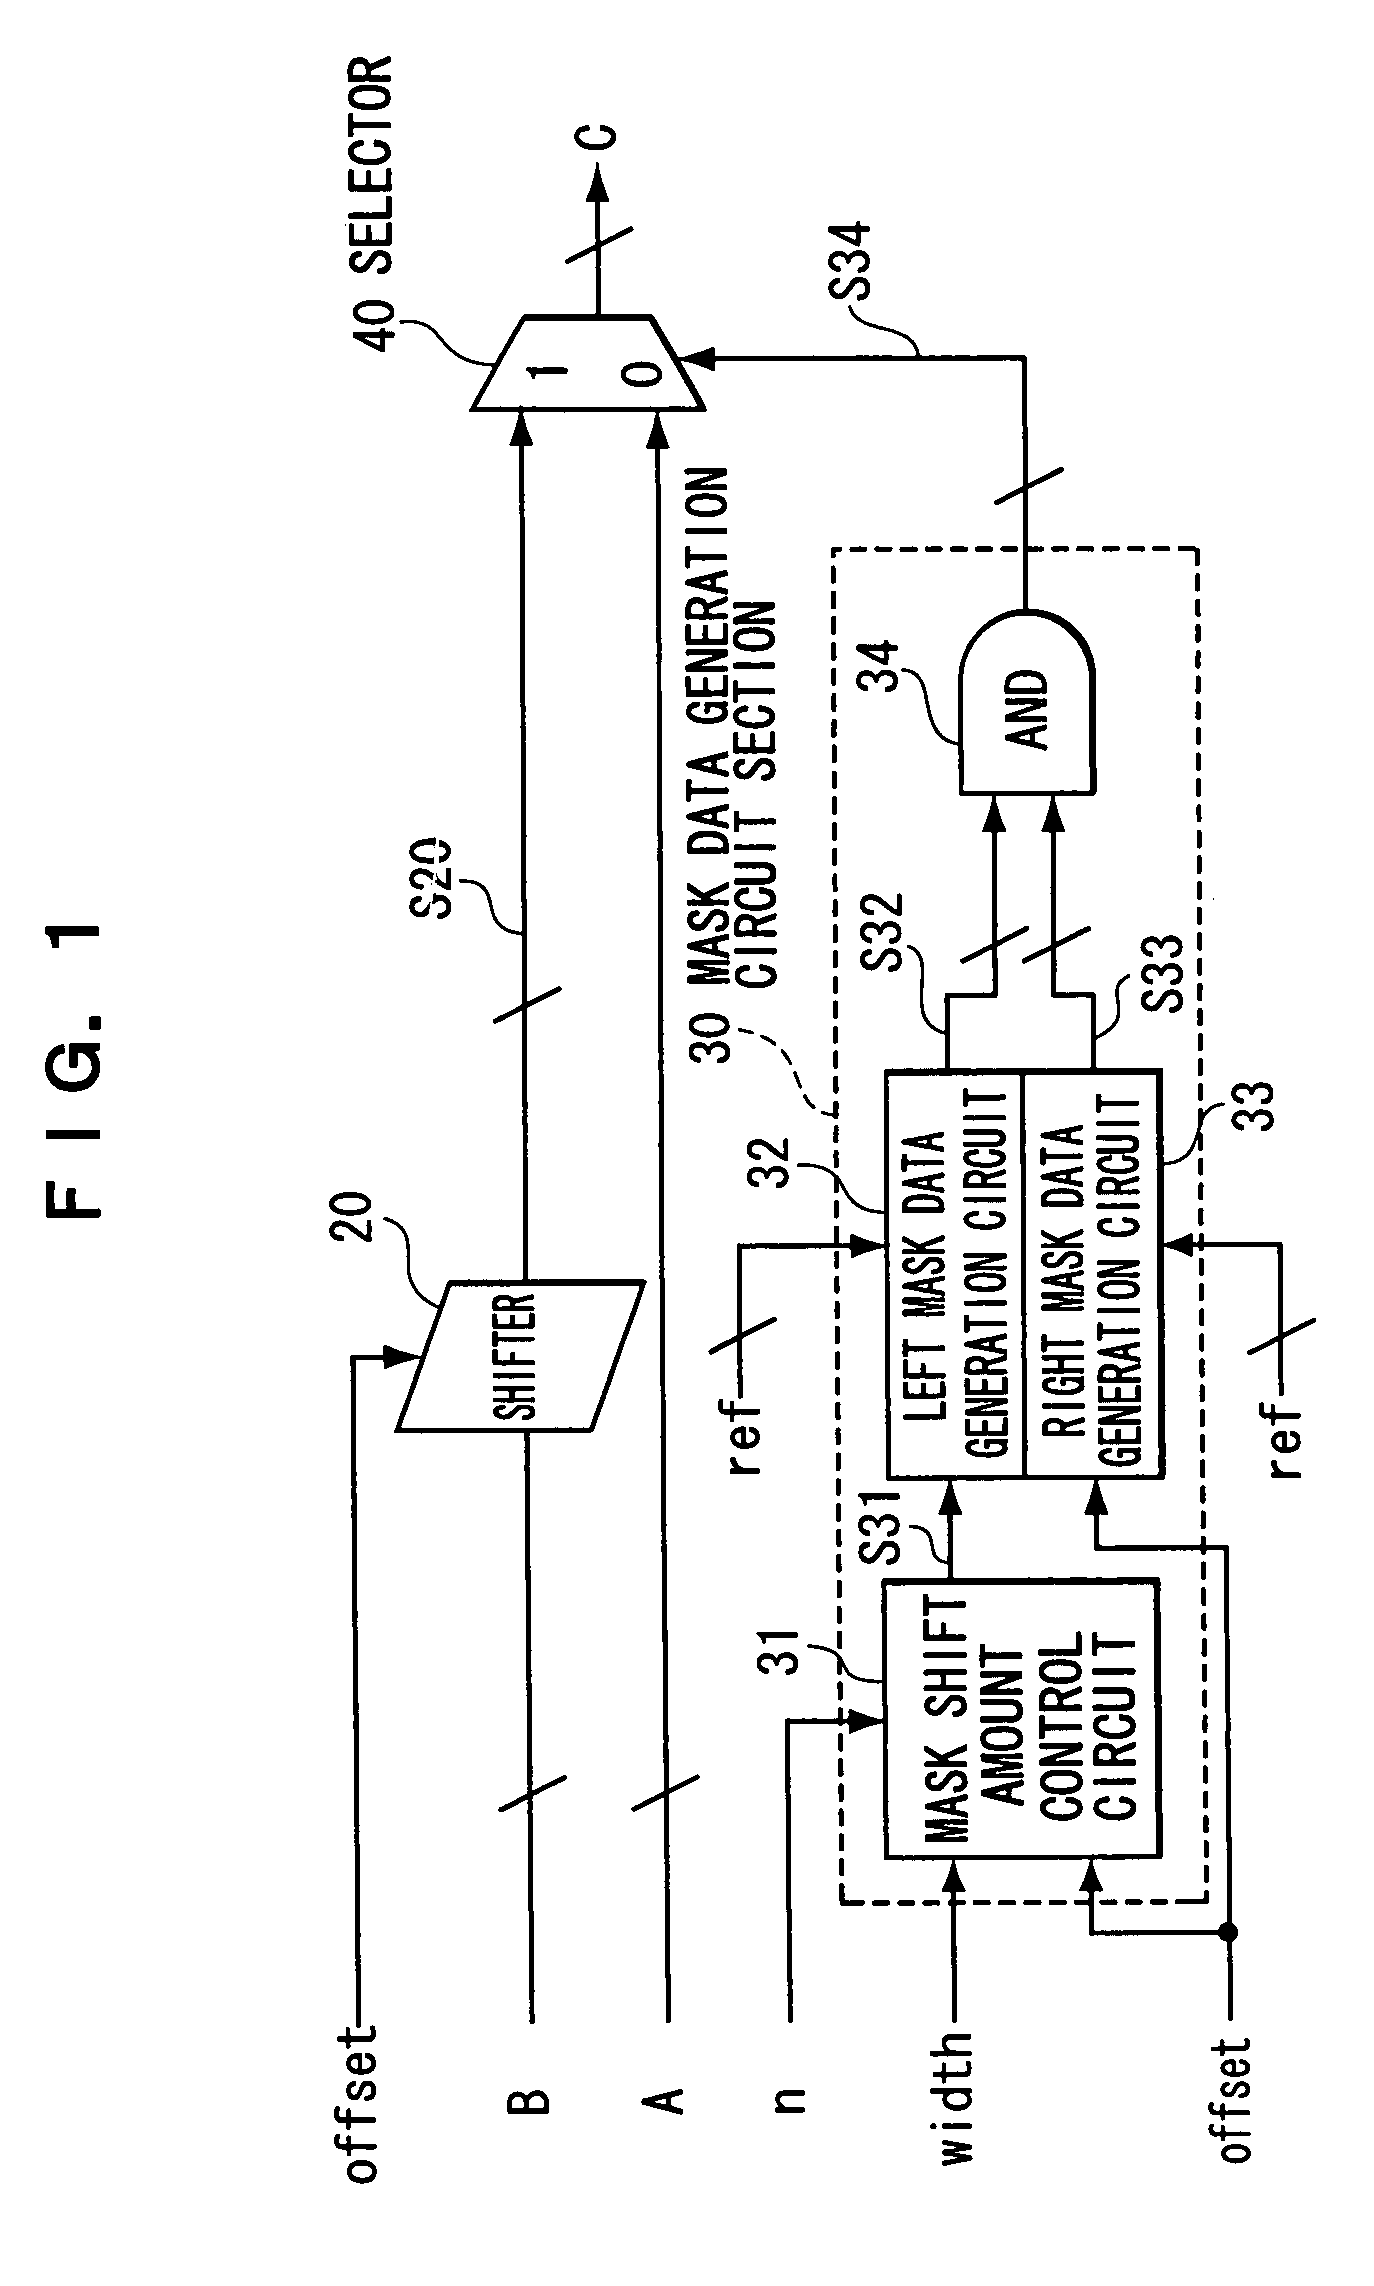 Bit field operation circuit